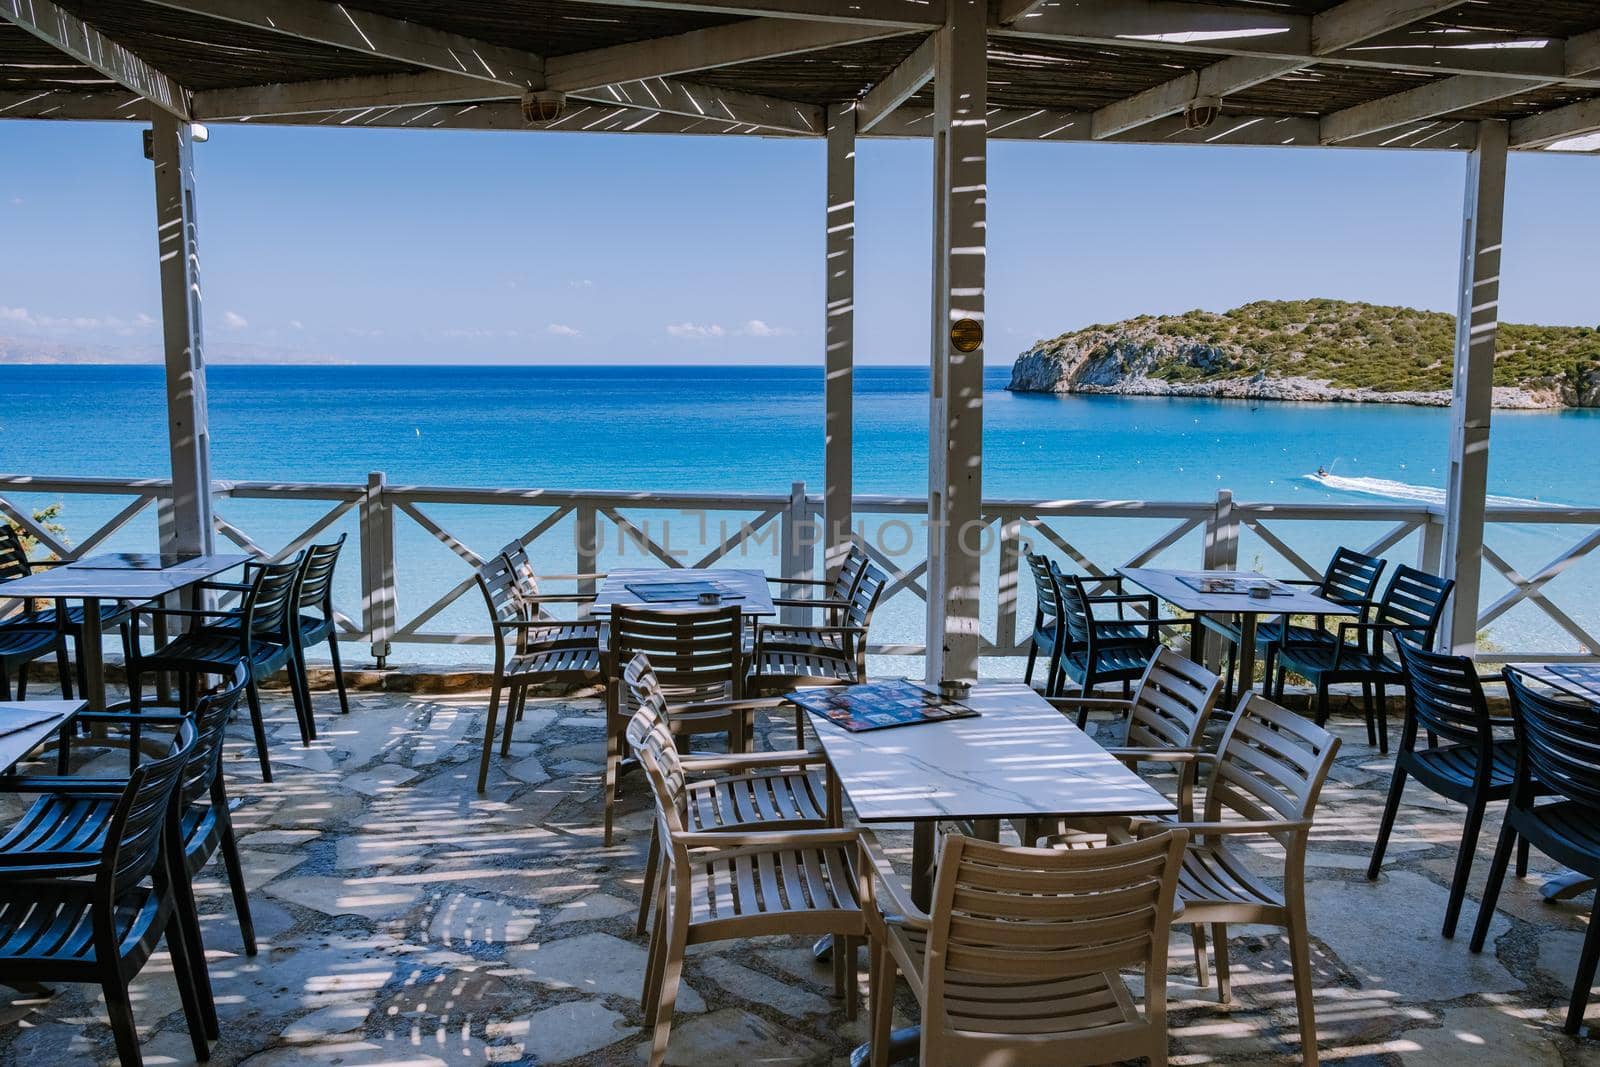 Tropical beach of Voulisma beach, Istron, Crete, Greece ,Most beautiful beaches of Crete island -Istron bay near Agios Nikolaos 